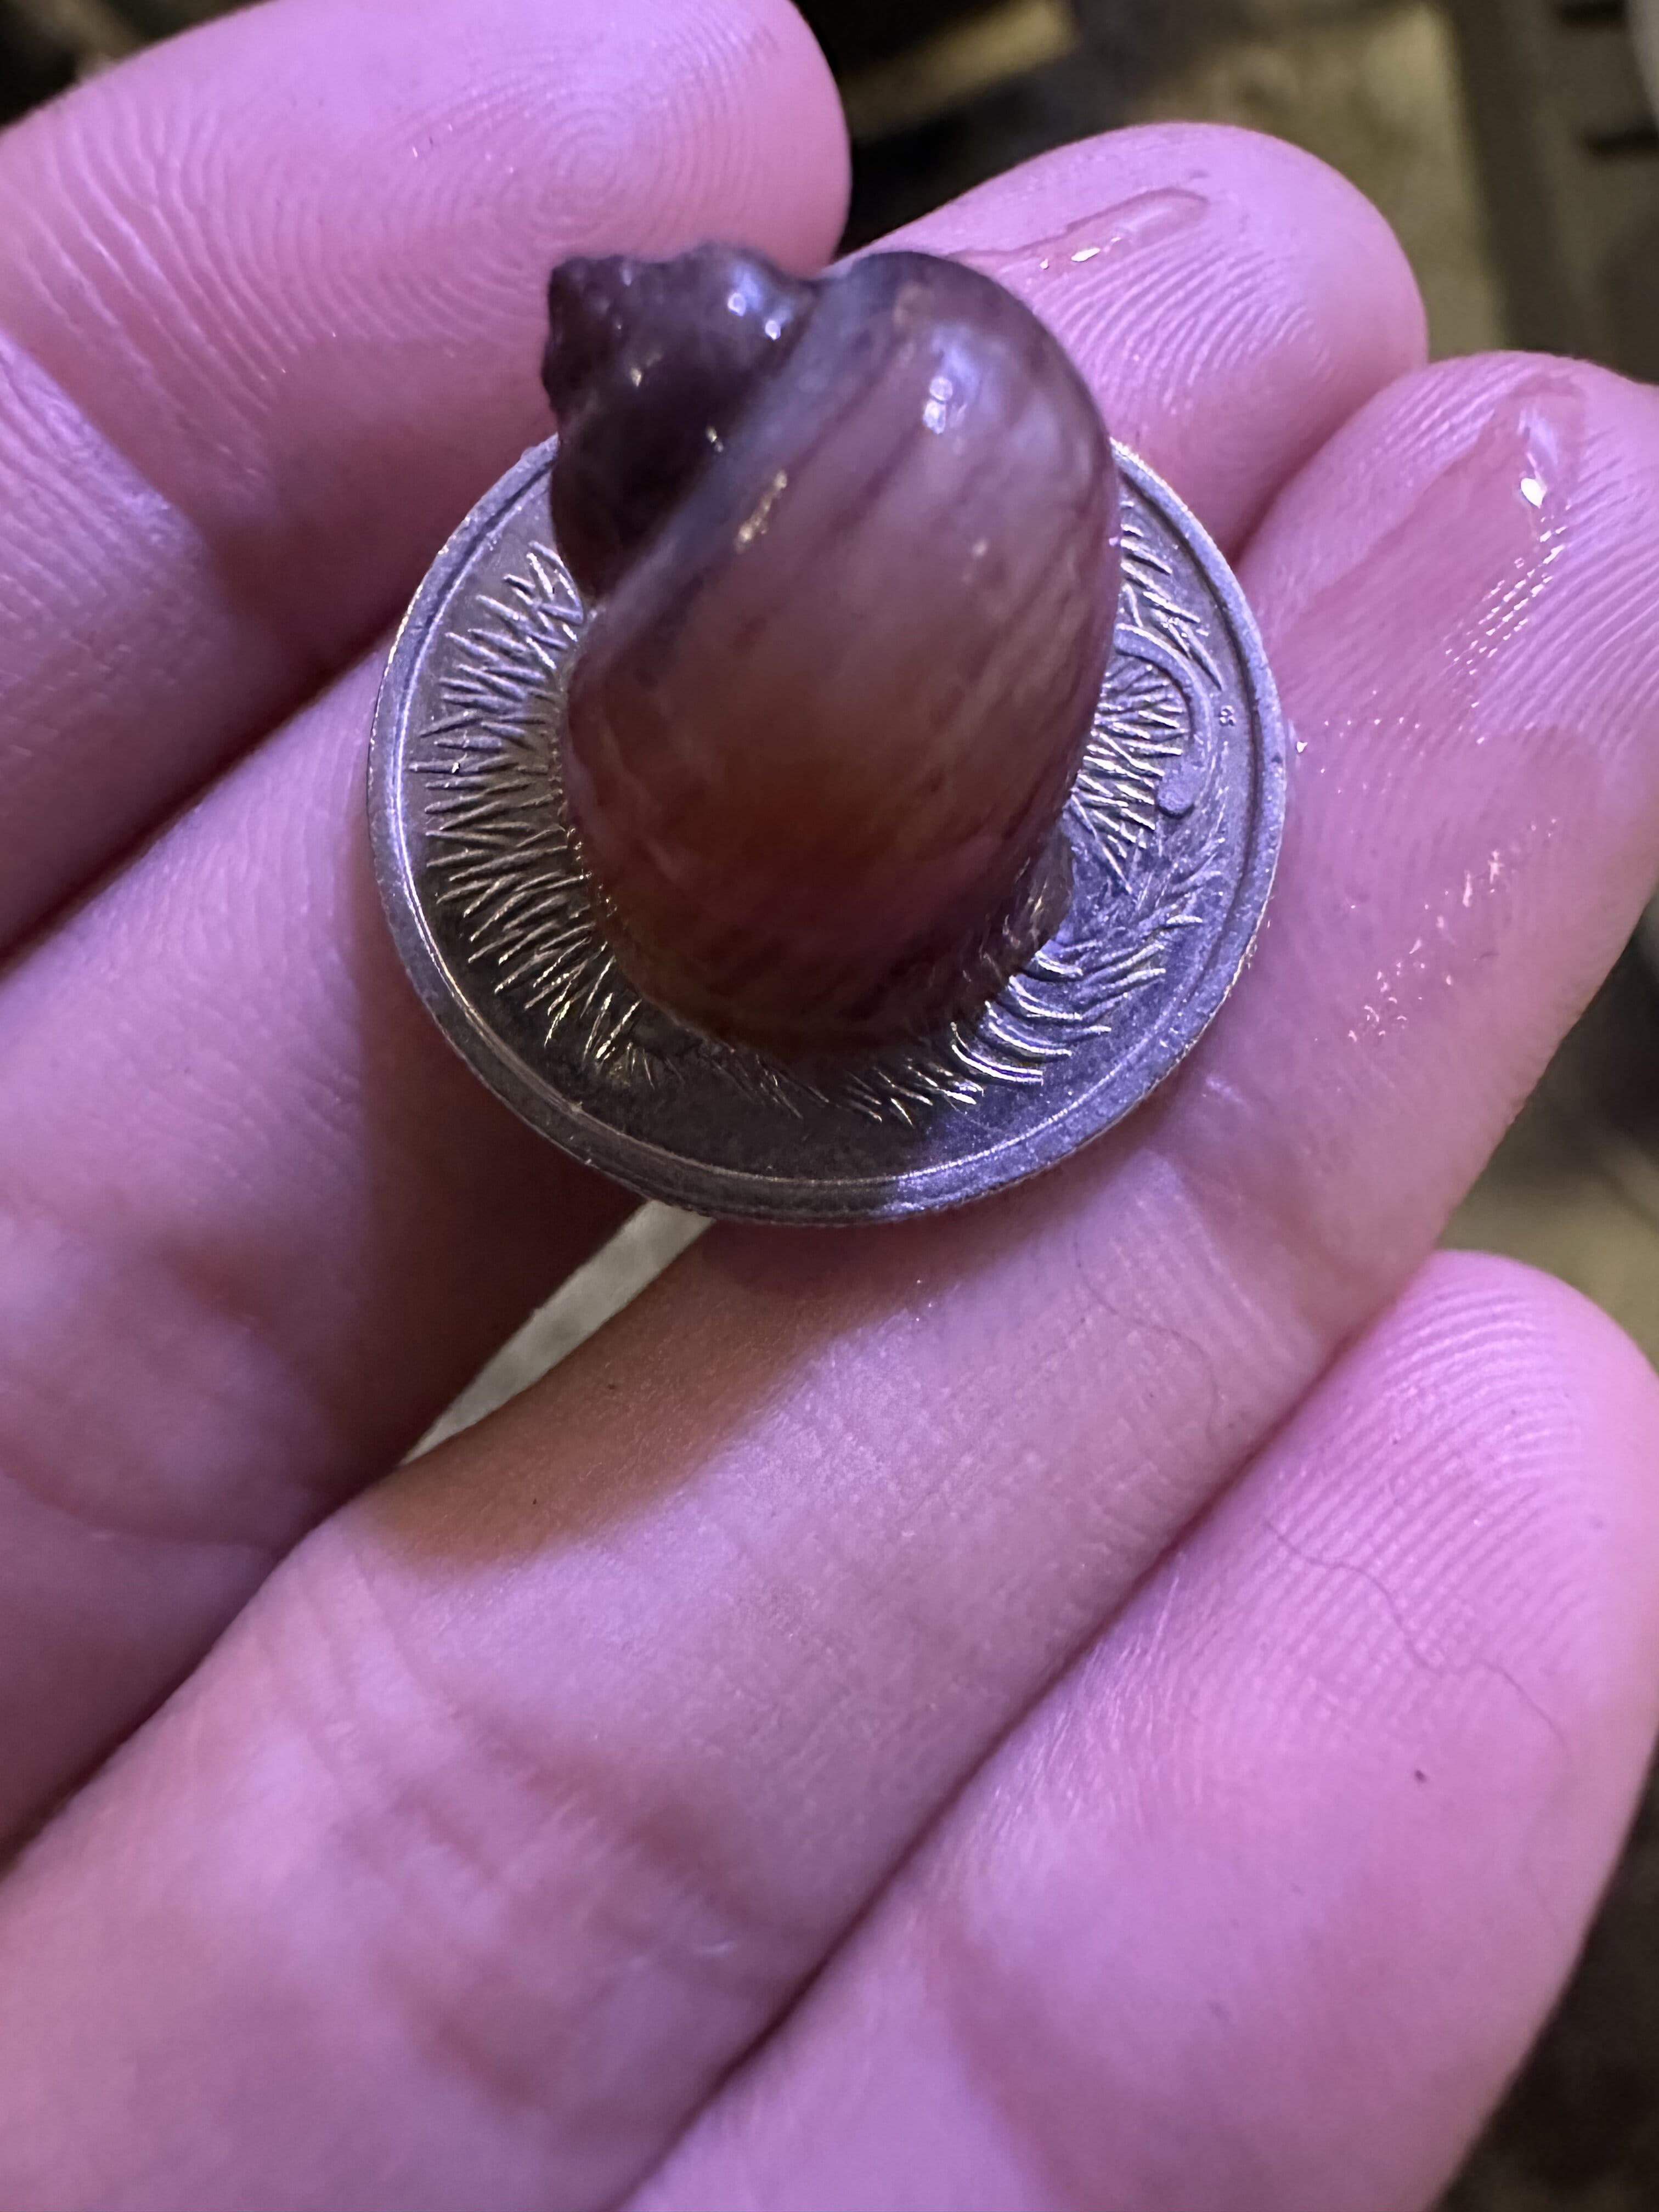 Rare Magenta Mystery Snails